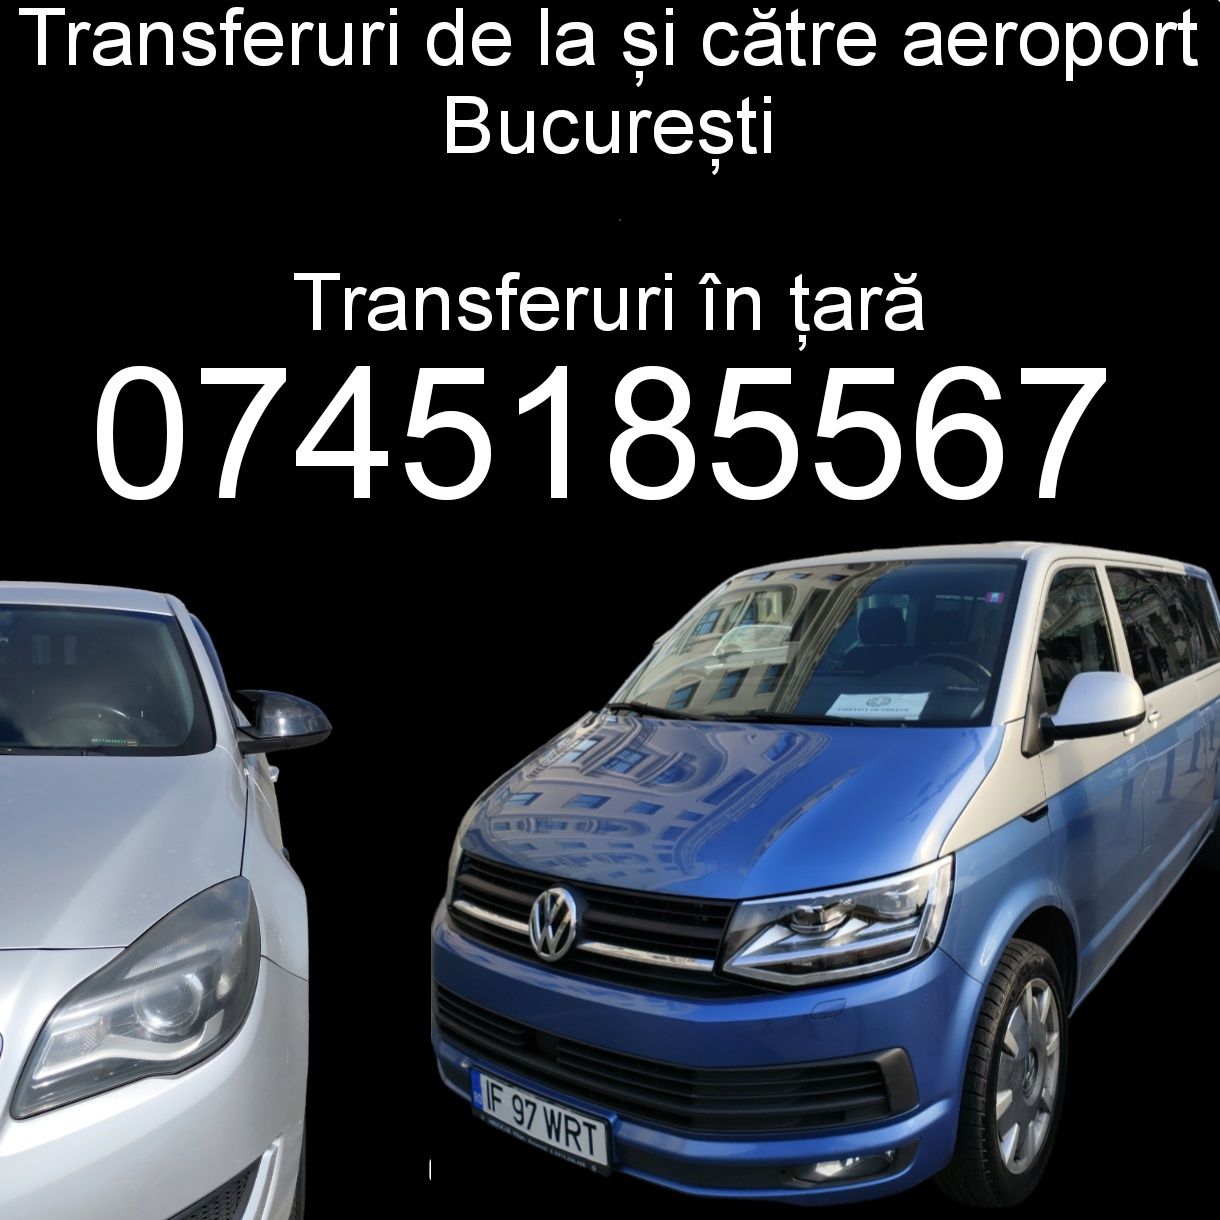 Transport persoane / Transferuri aeroport / Transferuri in tara